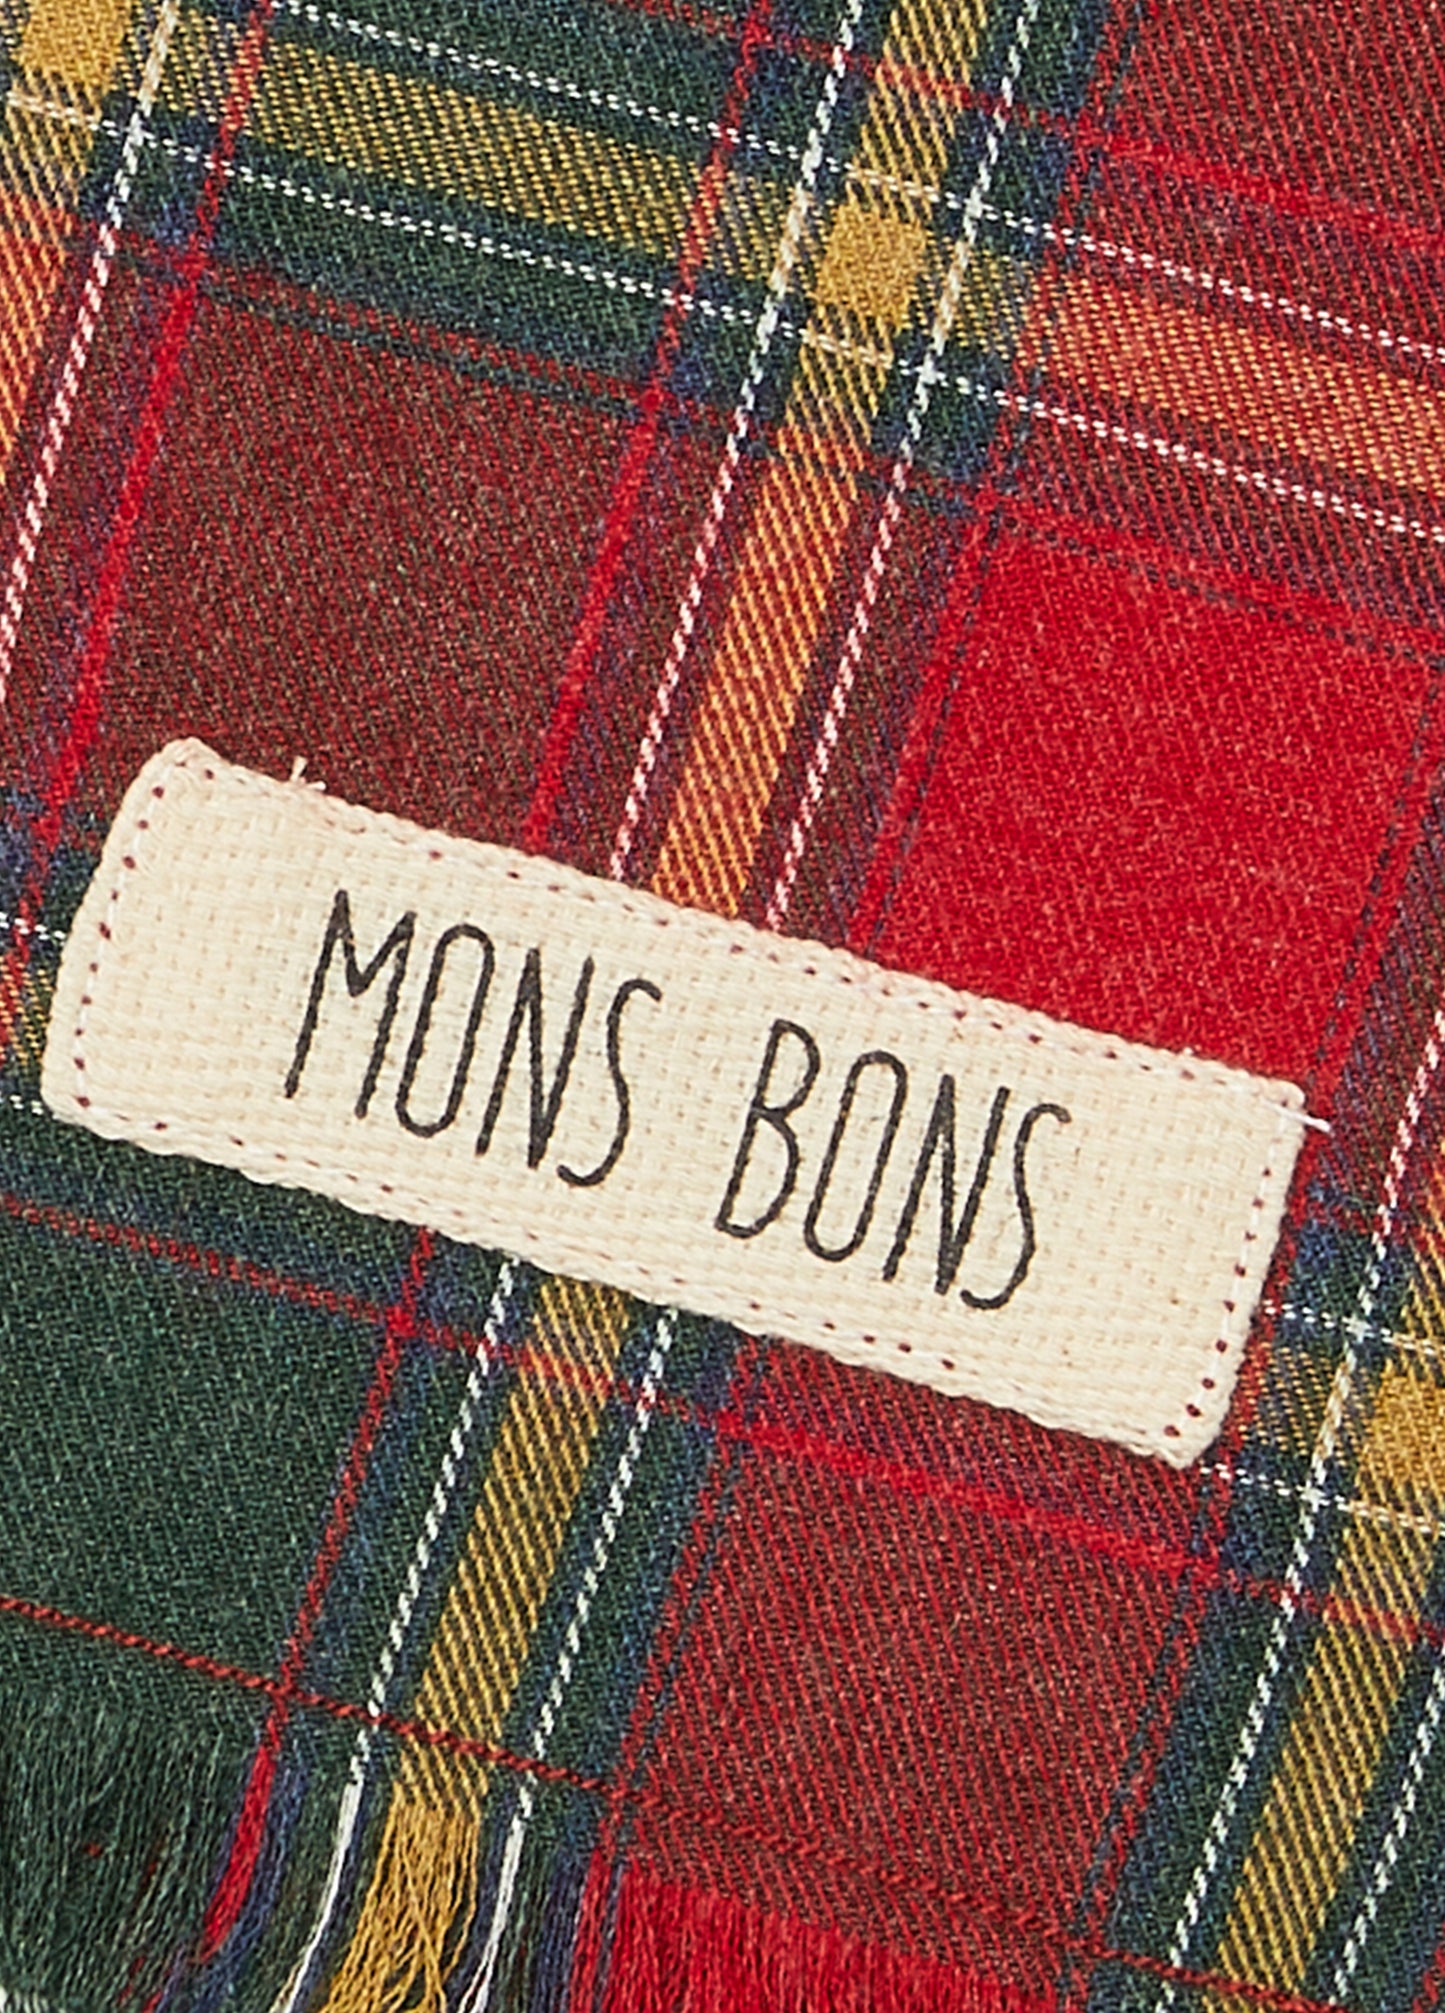 Klaus Bandana - MONS BONS